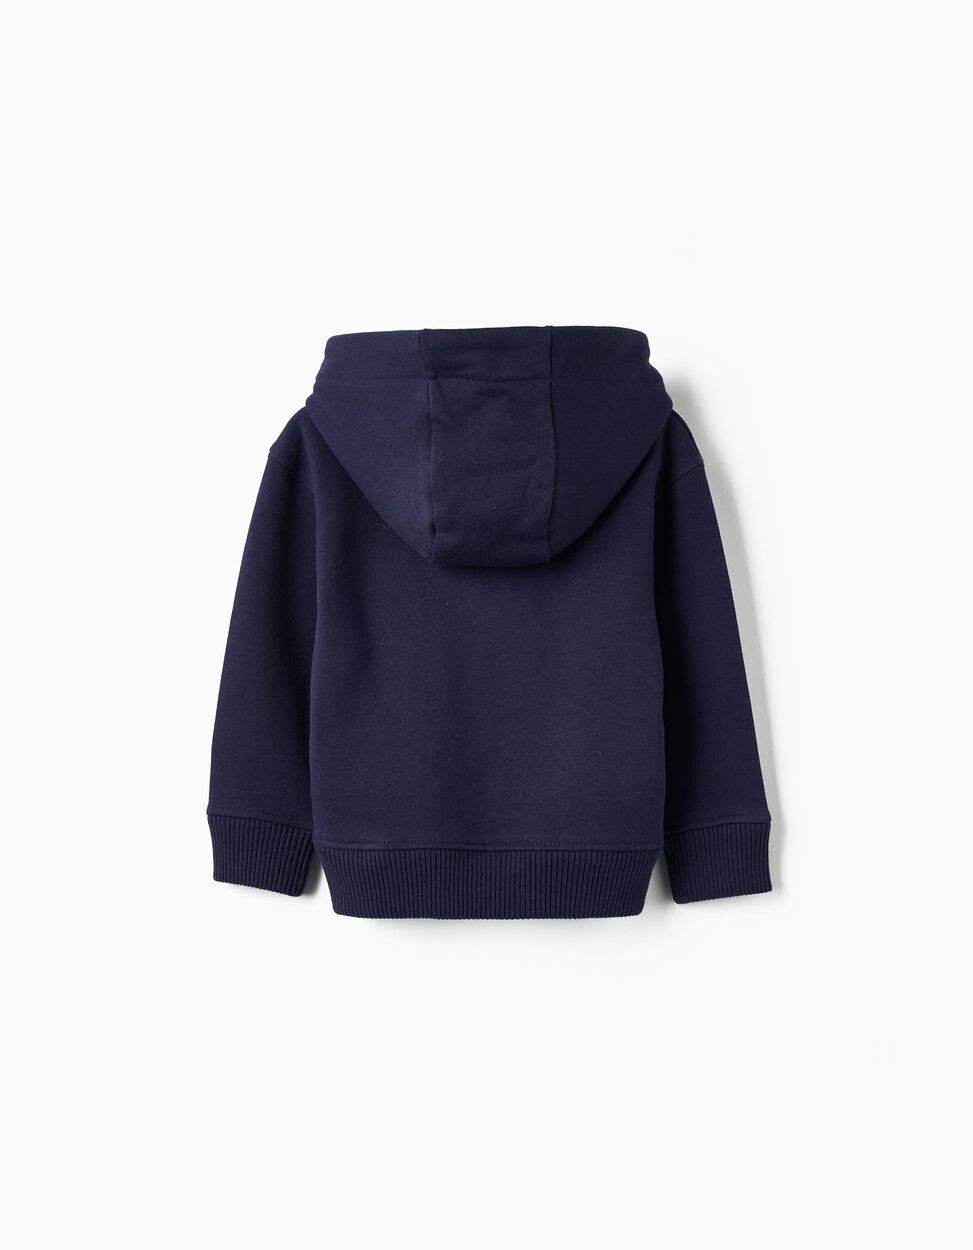 Buy Online Cotton Hooded Sweatshirt for Baby Boy, Dark Blue